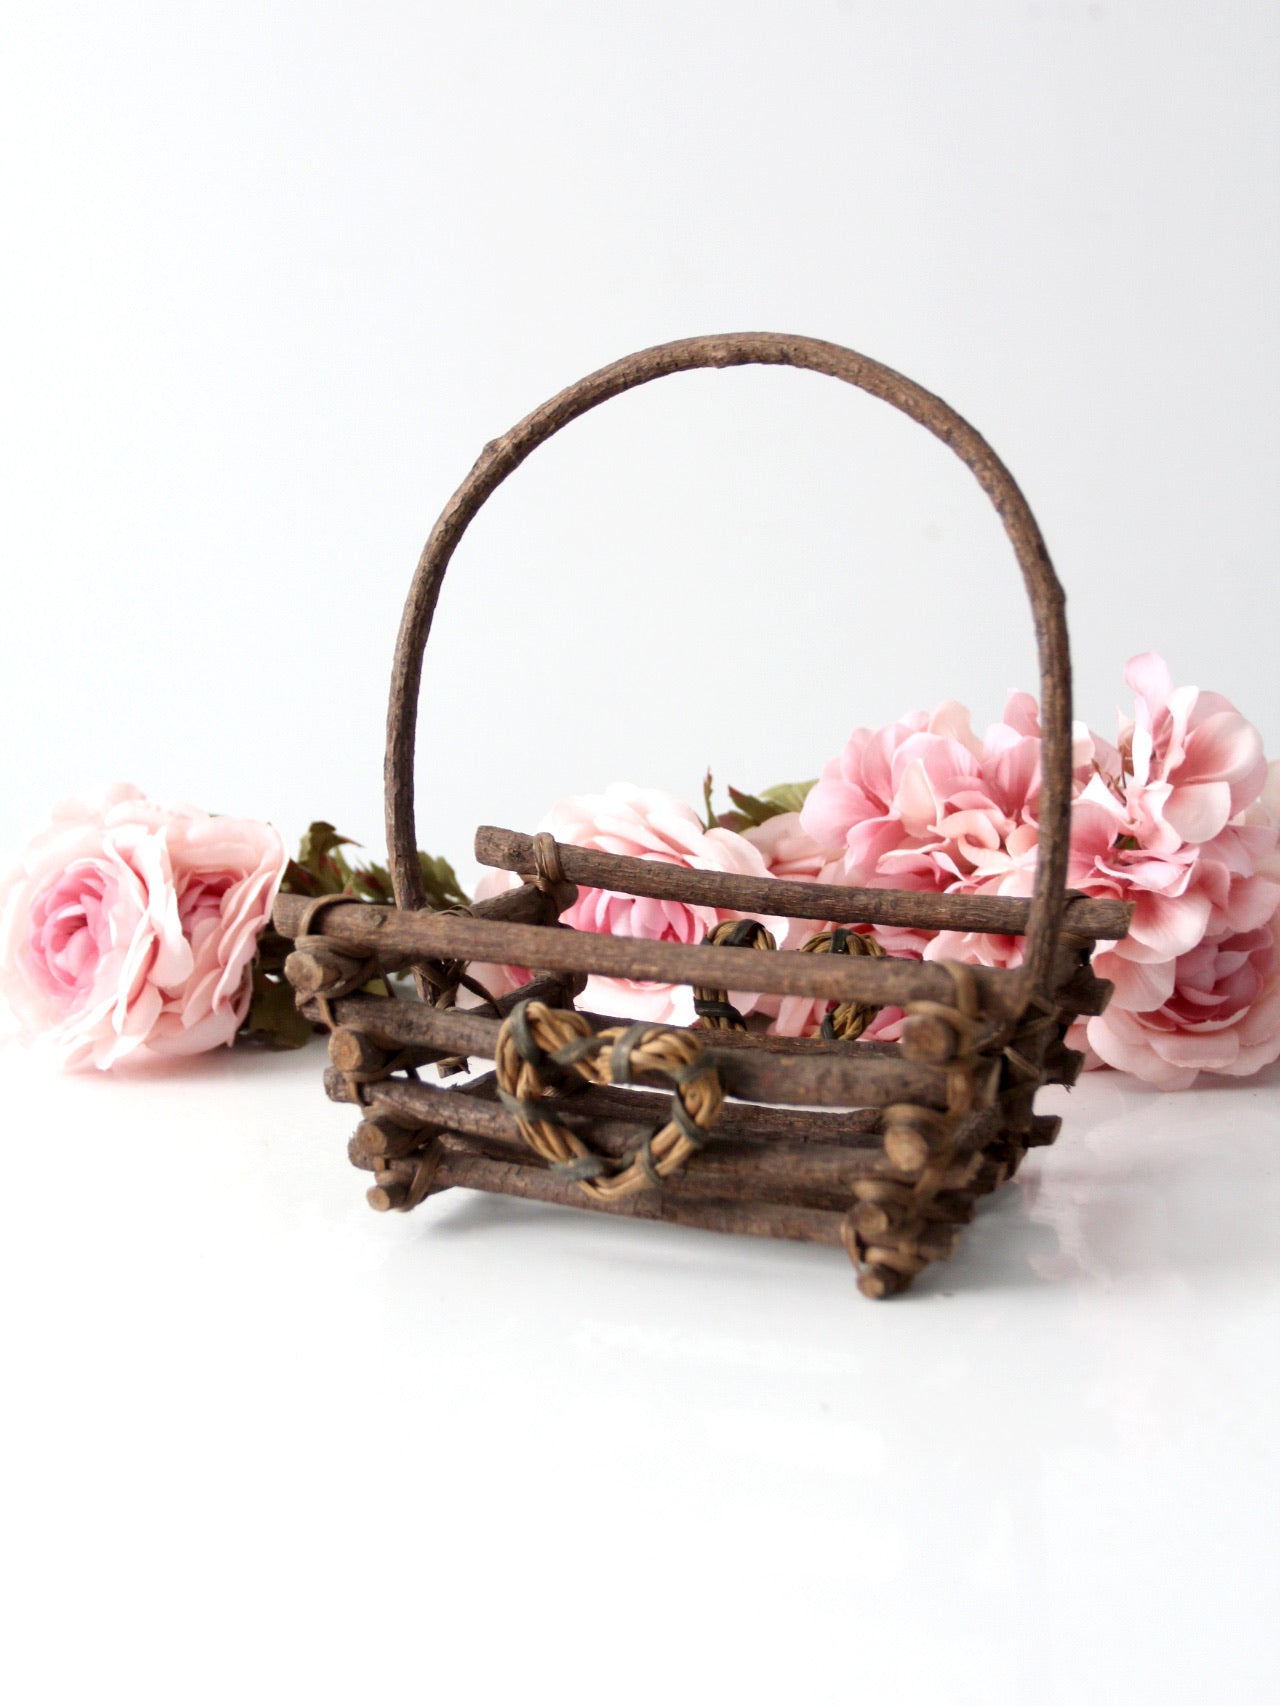 vintage rustic twig basket with heart